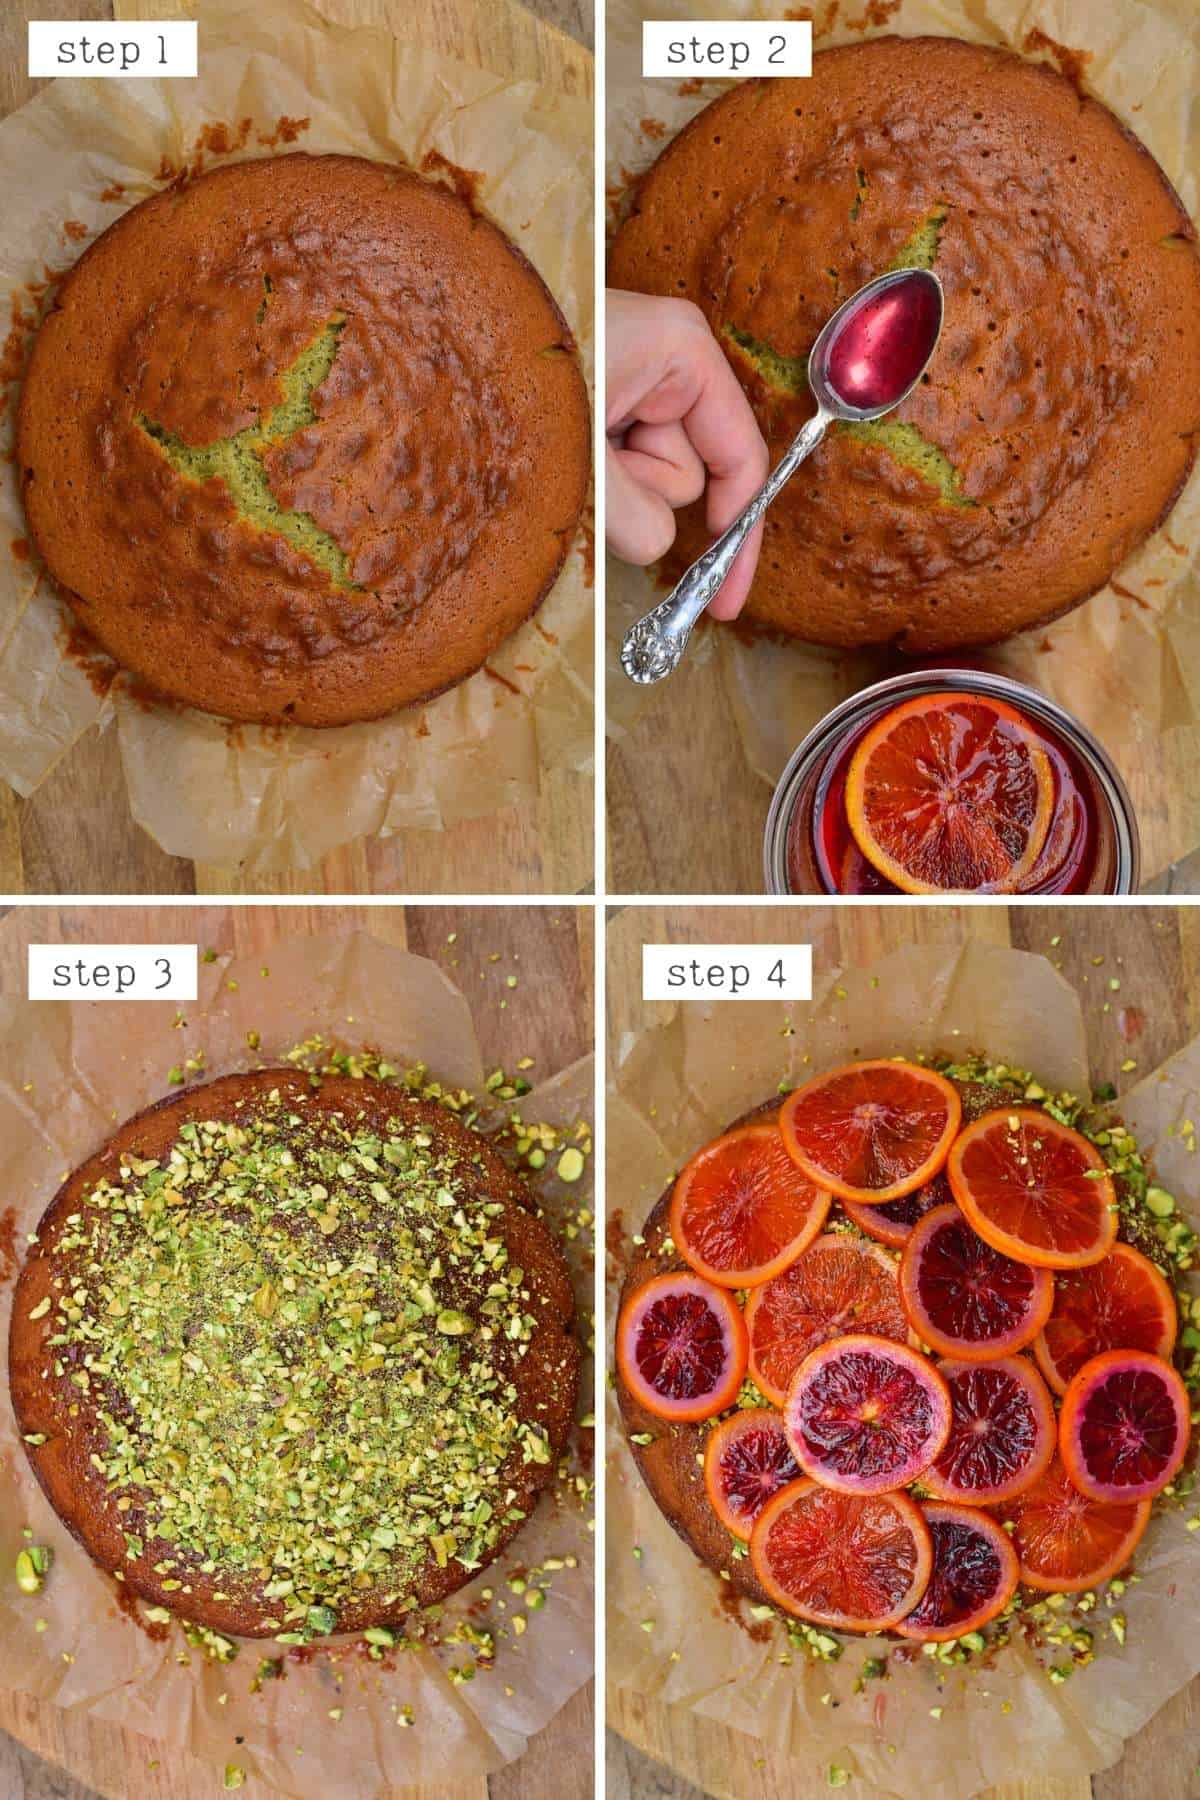 Steps for decorating orange cake